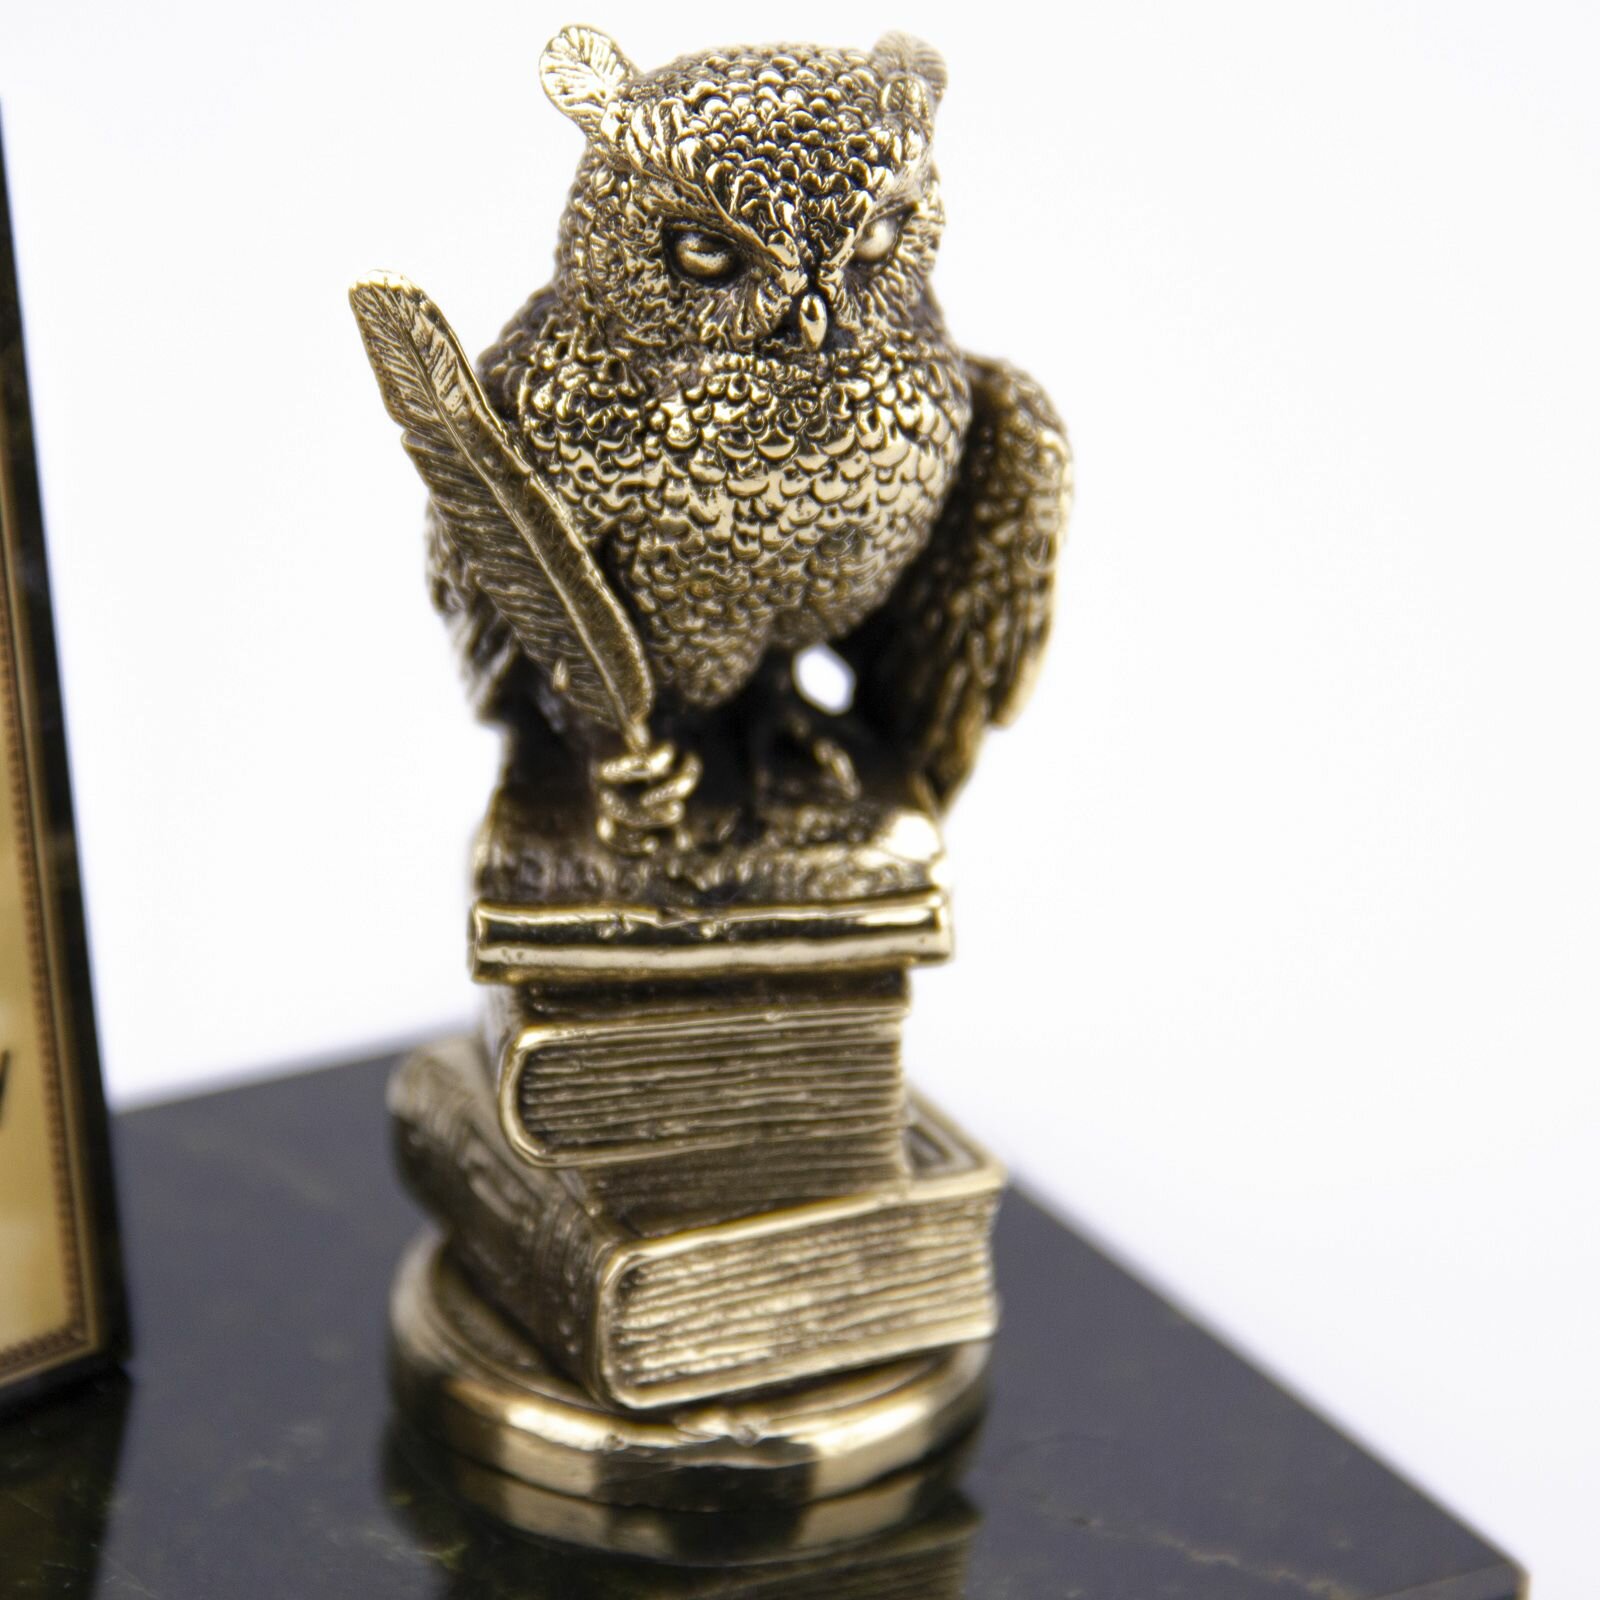 Фигурка на камне "Сова на книгах", бронза, ручная работа. Сувенир на подарок